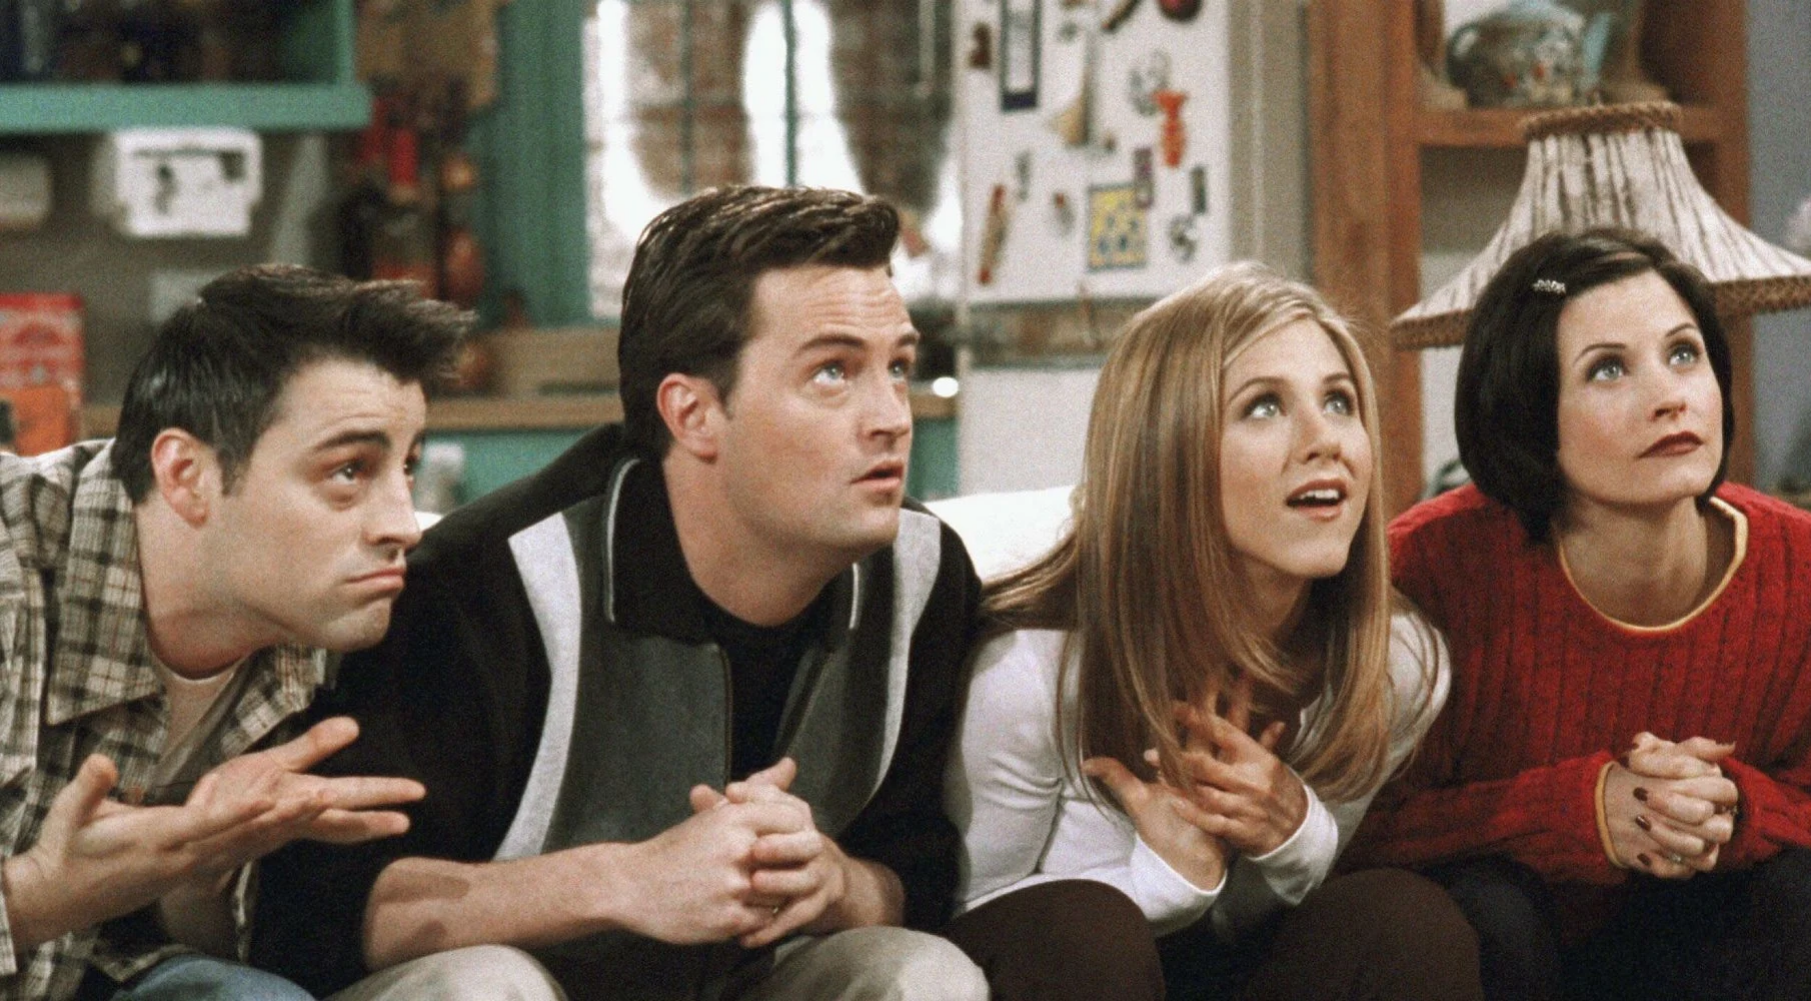 Friends - Joey - Chandler - Monica - Joey - Couch - 90s TV show